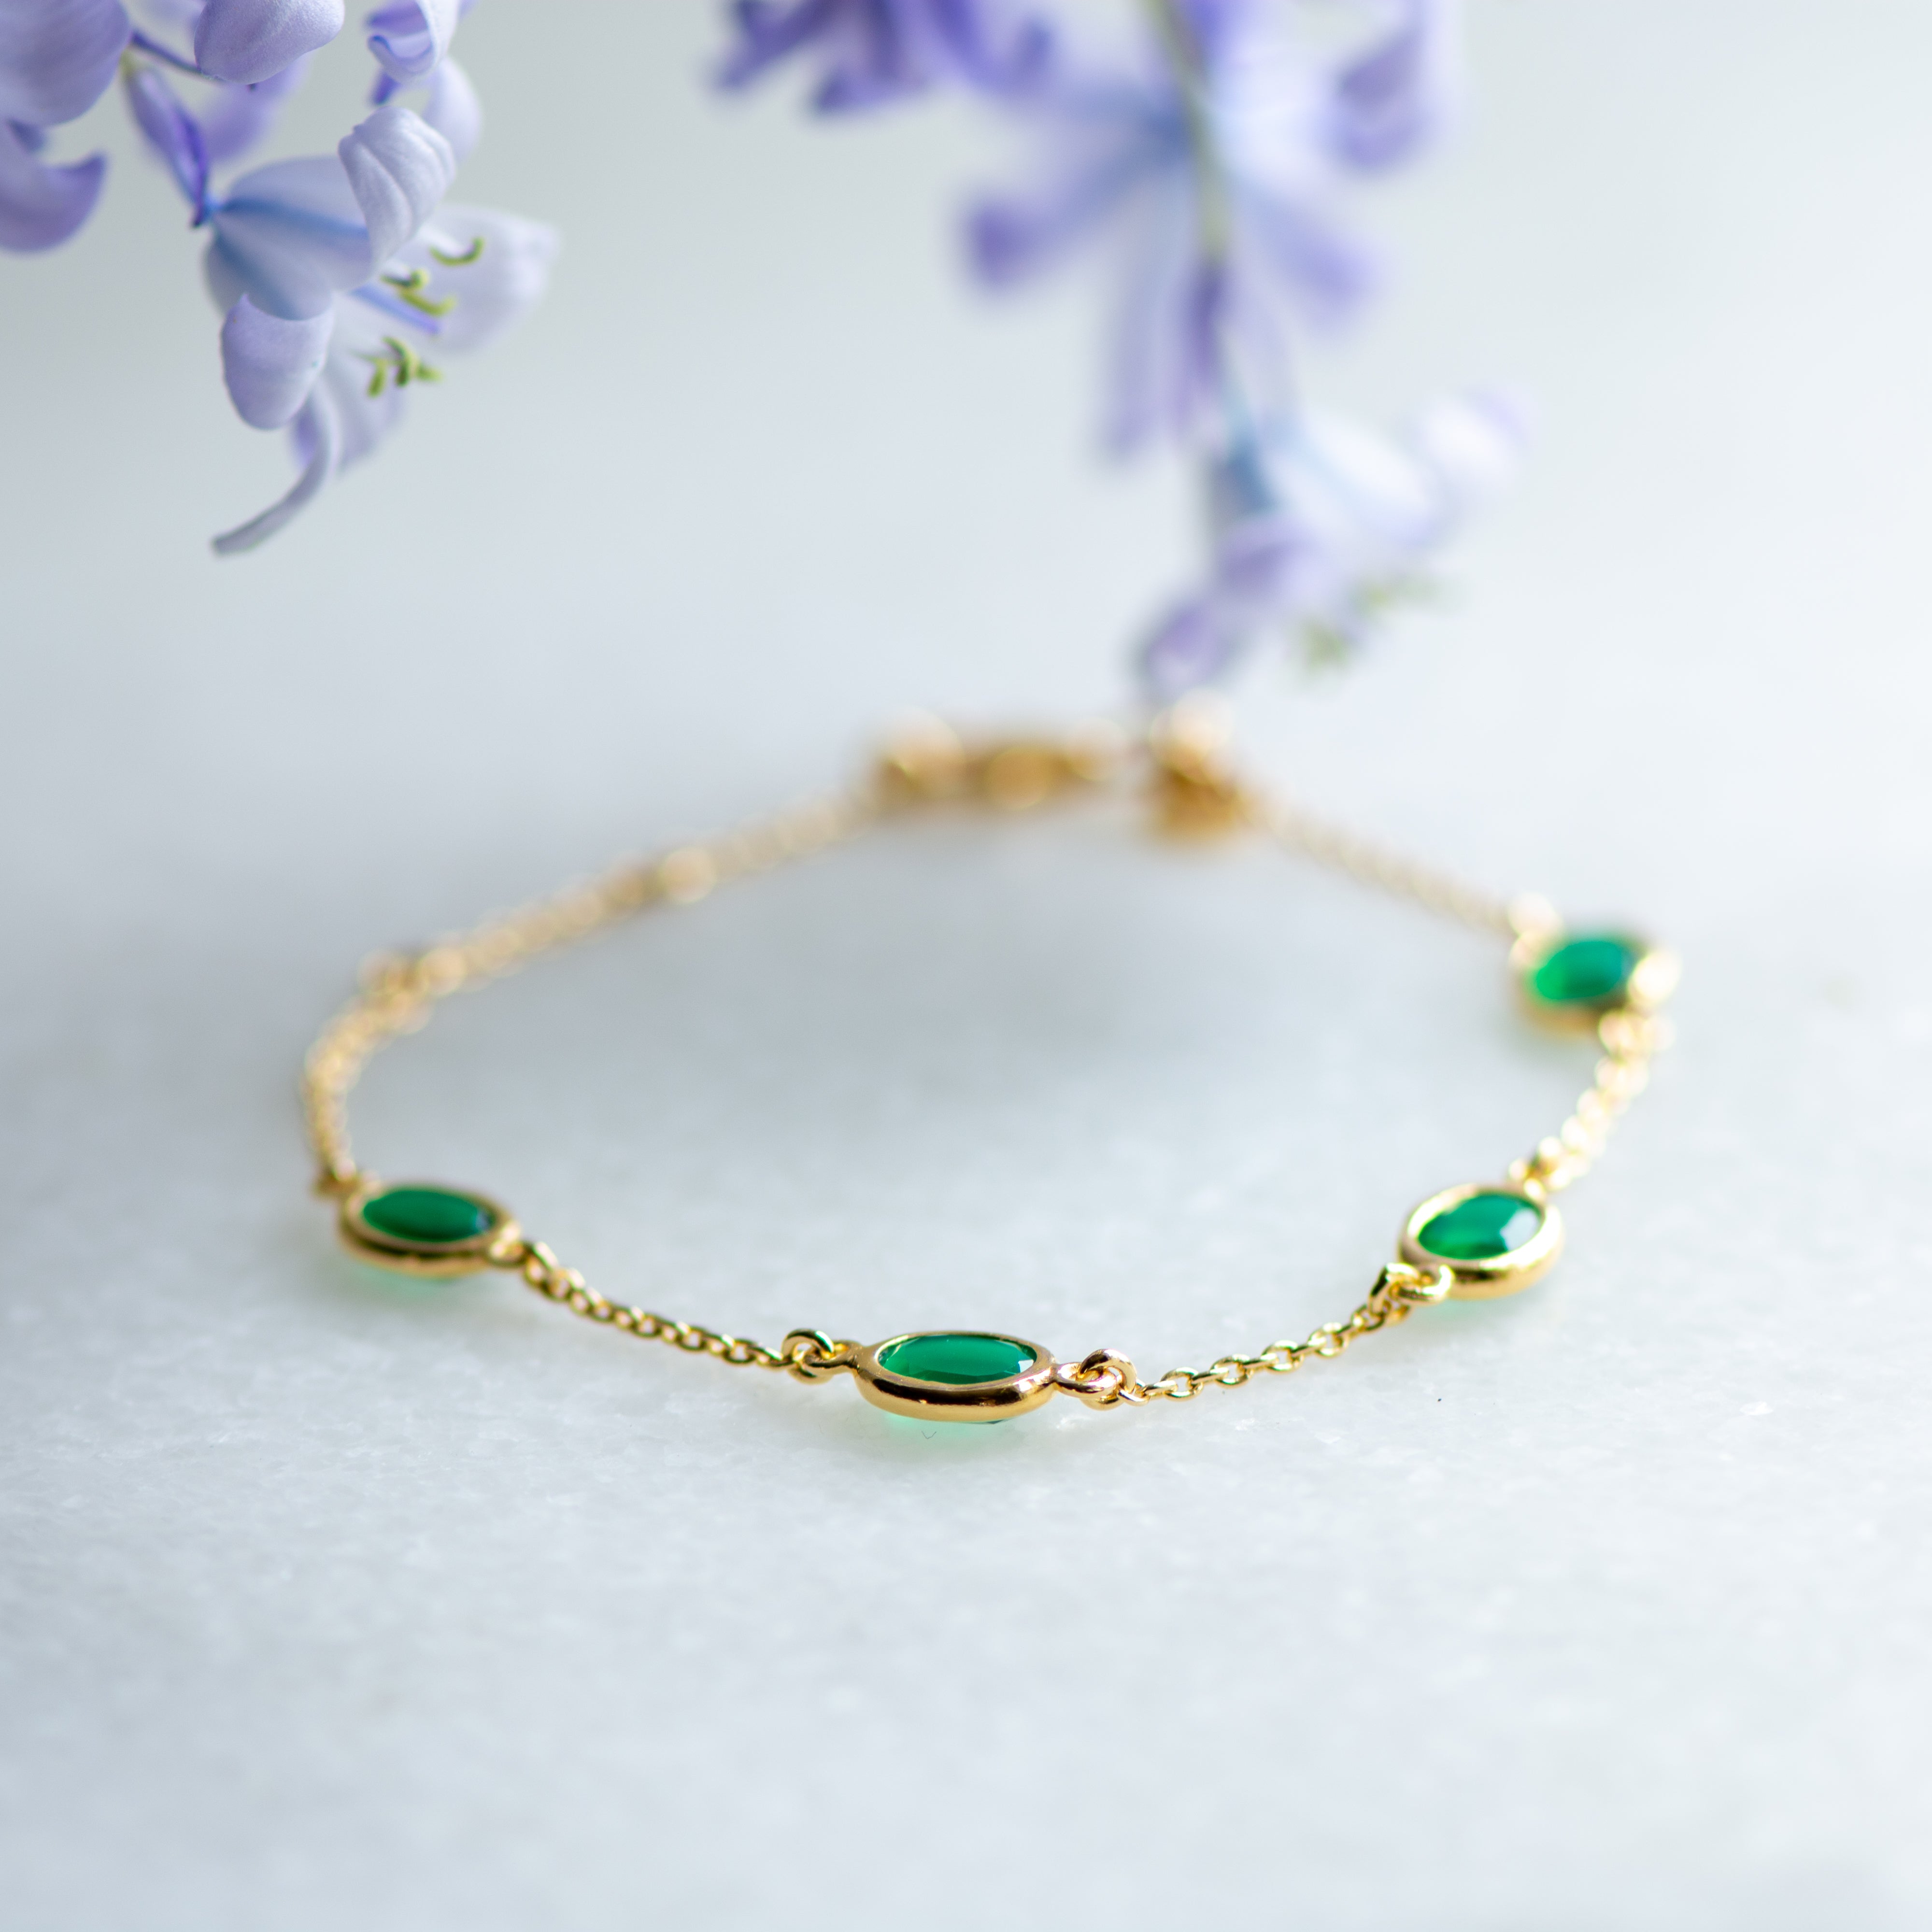 marilyn gold bracelet with green onyx from memara